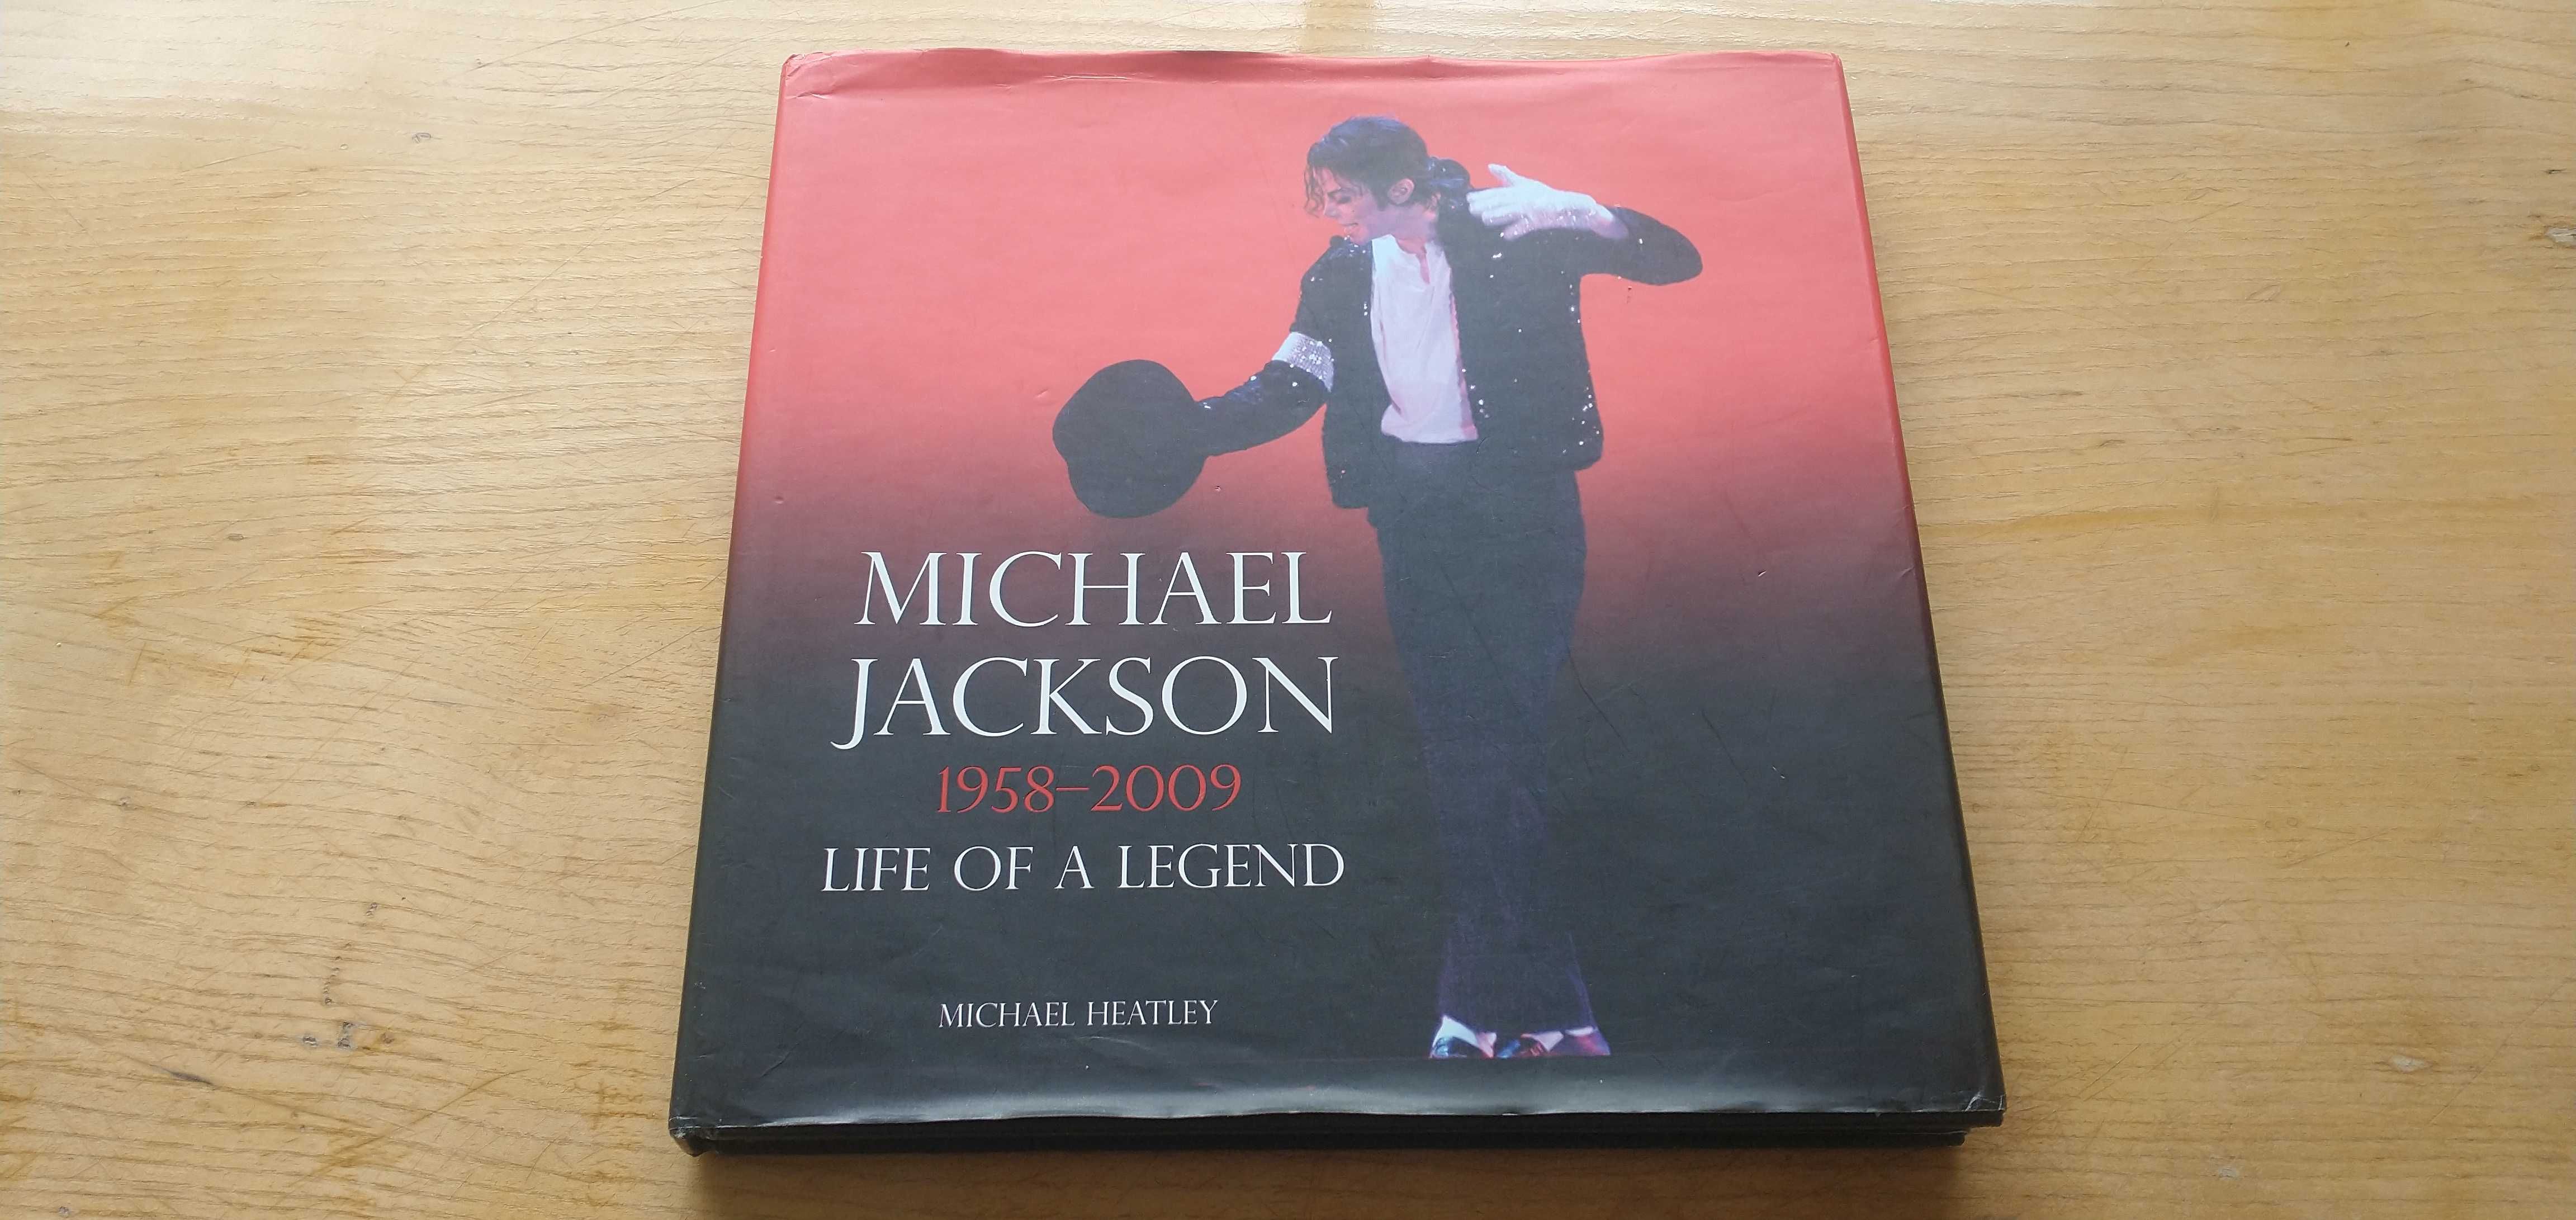 Vand album foto Michael Jackson - Life of a Legend 1958-2009 Hardcover